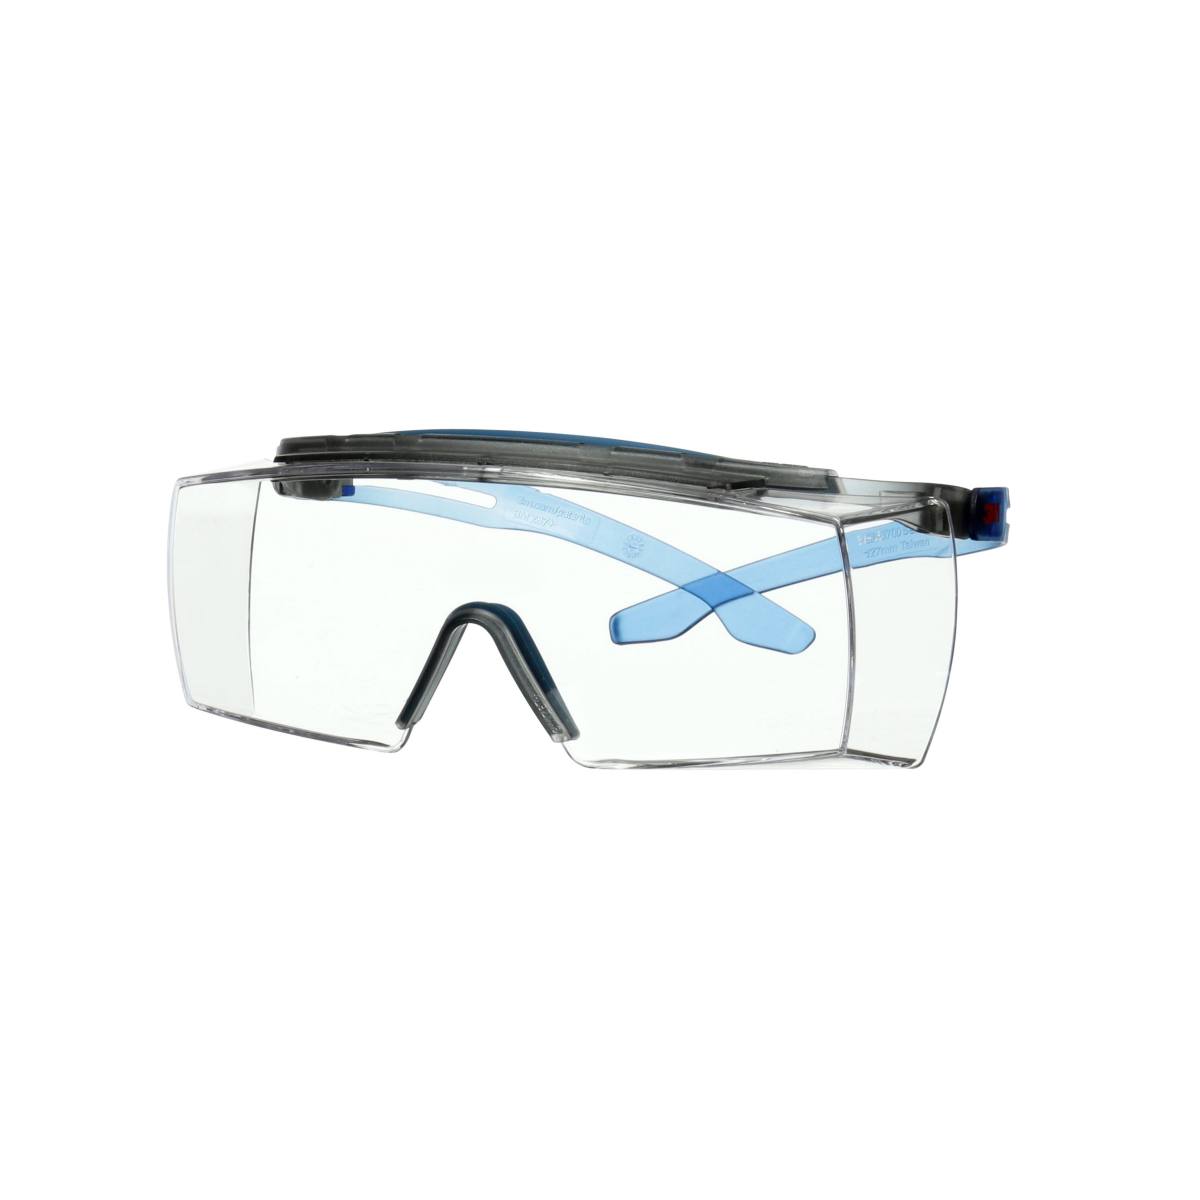 3M SecureFit 3700 over spectacles, blue temples, integrated eyebrow protection, Scotchgard anti-fog coating (K&amp;N), transparent lens, angle-adjustable, SF3701XSGAF-BLU-EU